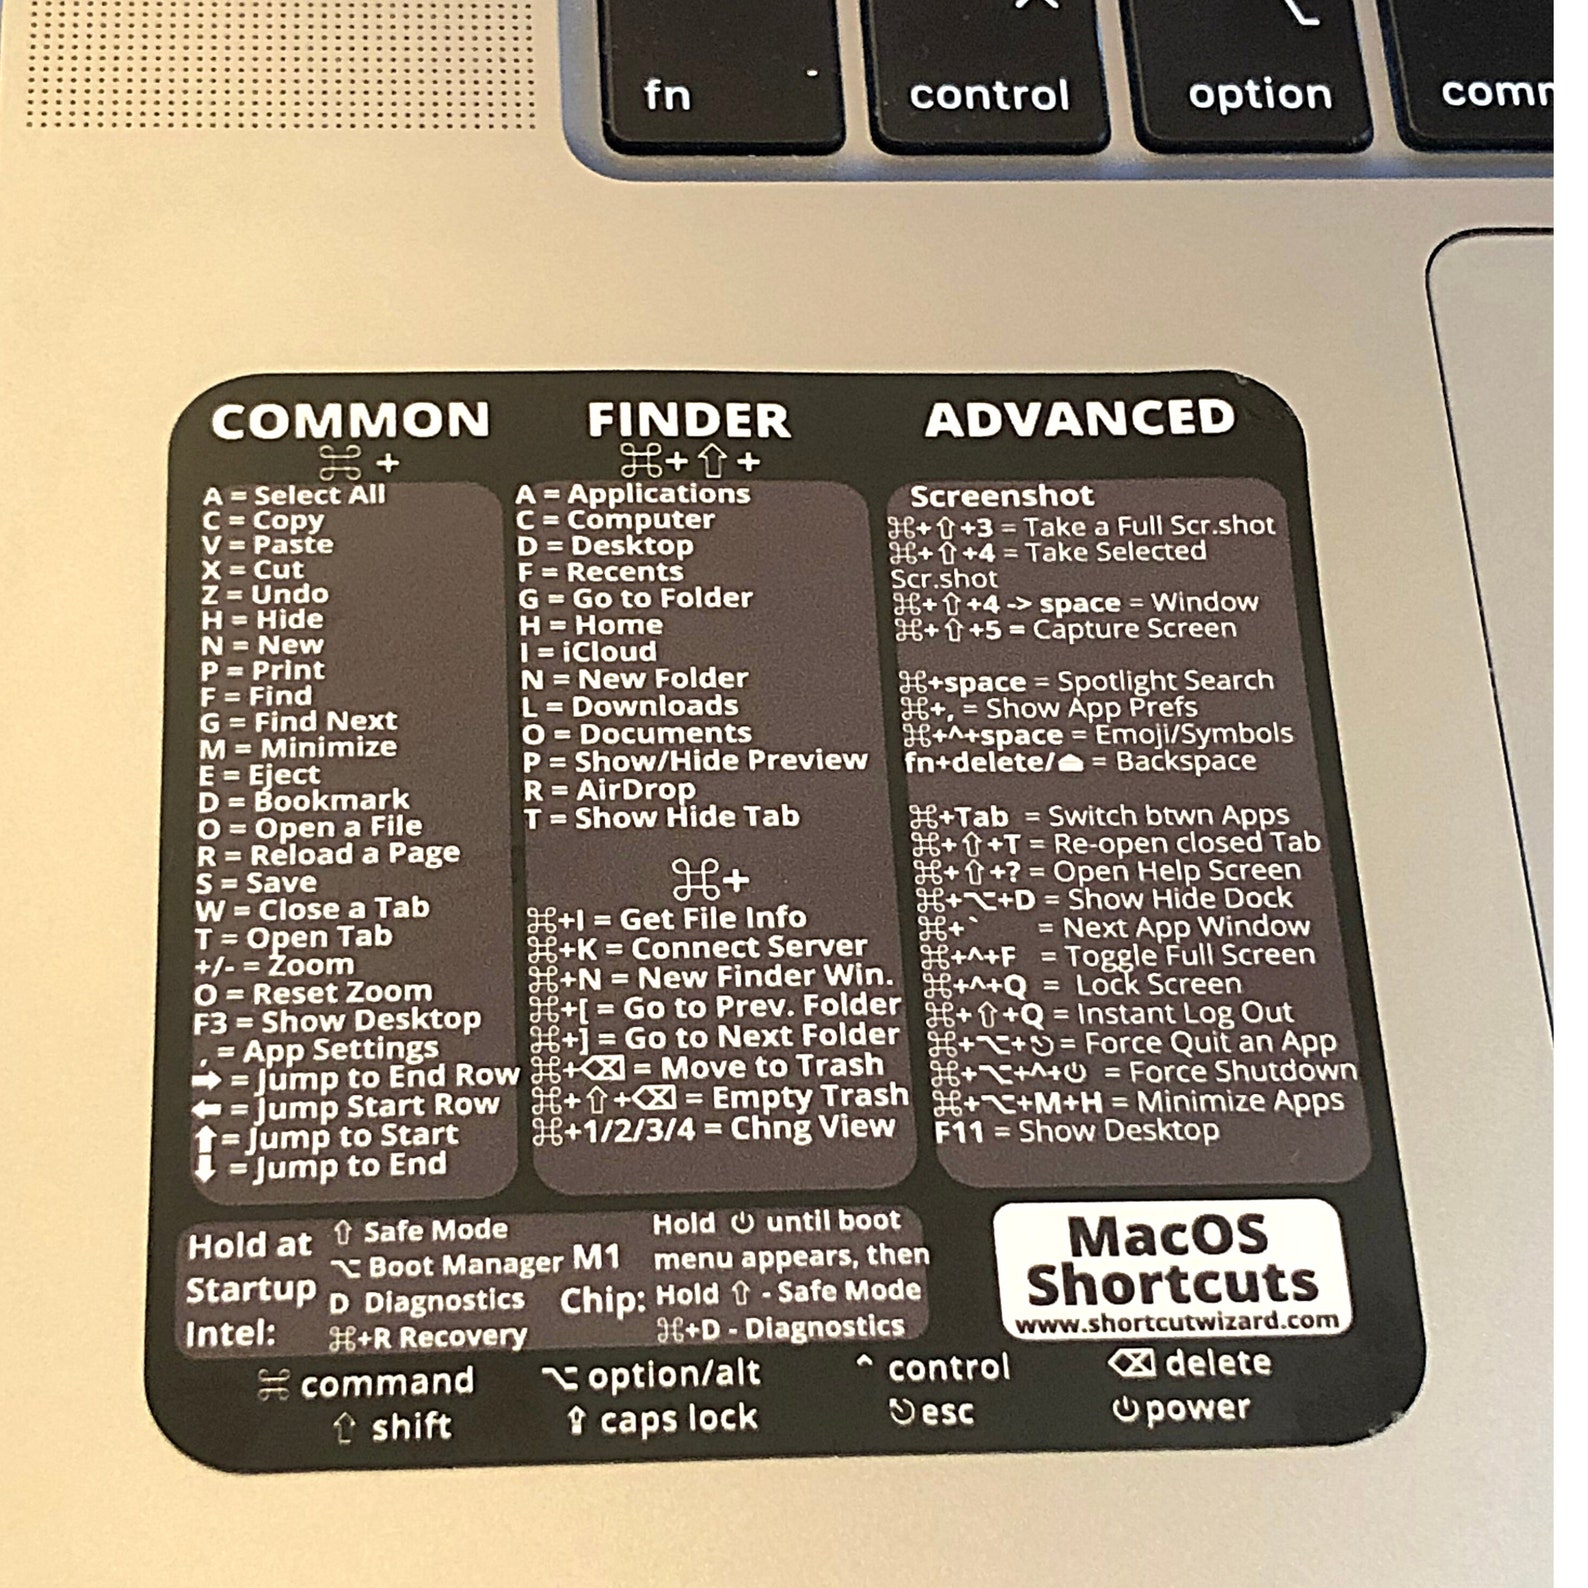 macos keyboard shortcuts cheat sheet